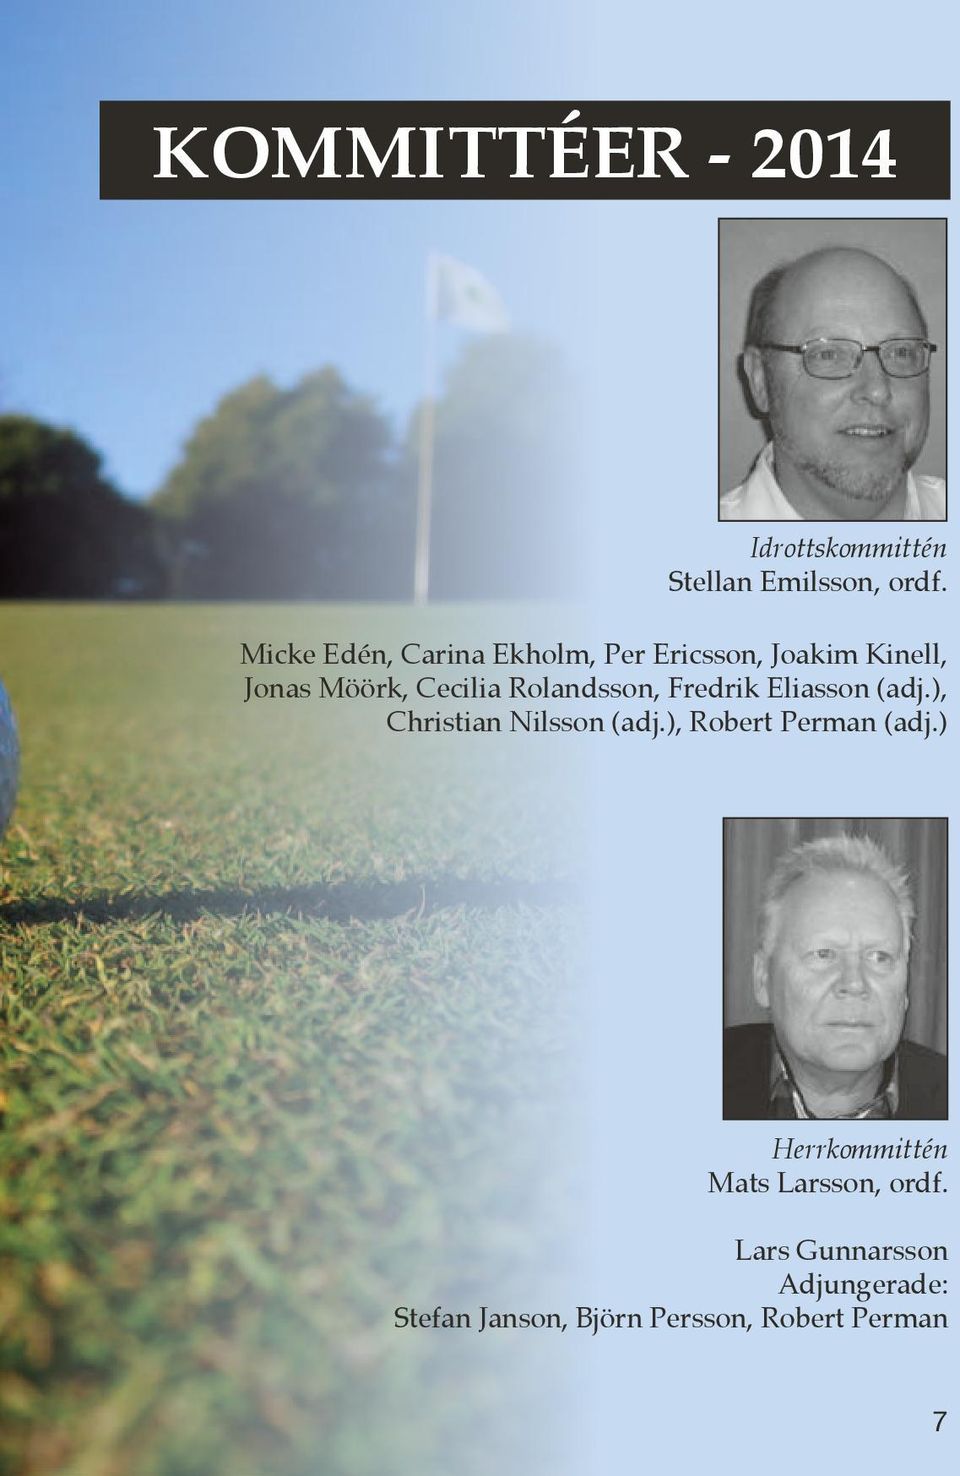 Rolandsson, Fredrik Eliasson (adj.), Christian Nilsson (adj.), Robert Perman (adj.